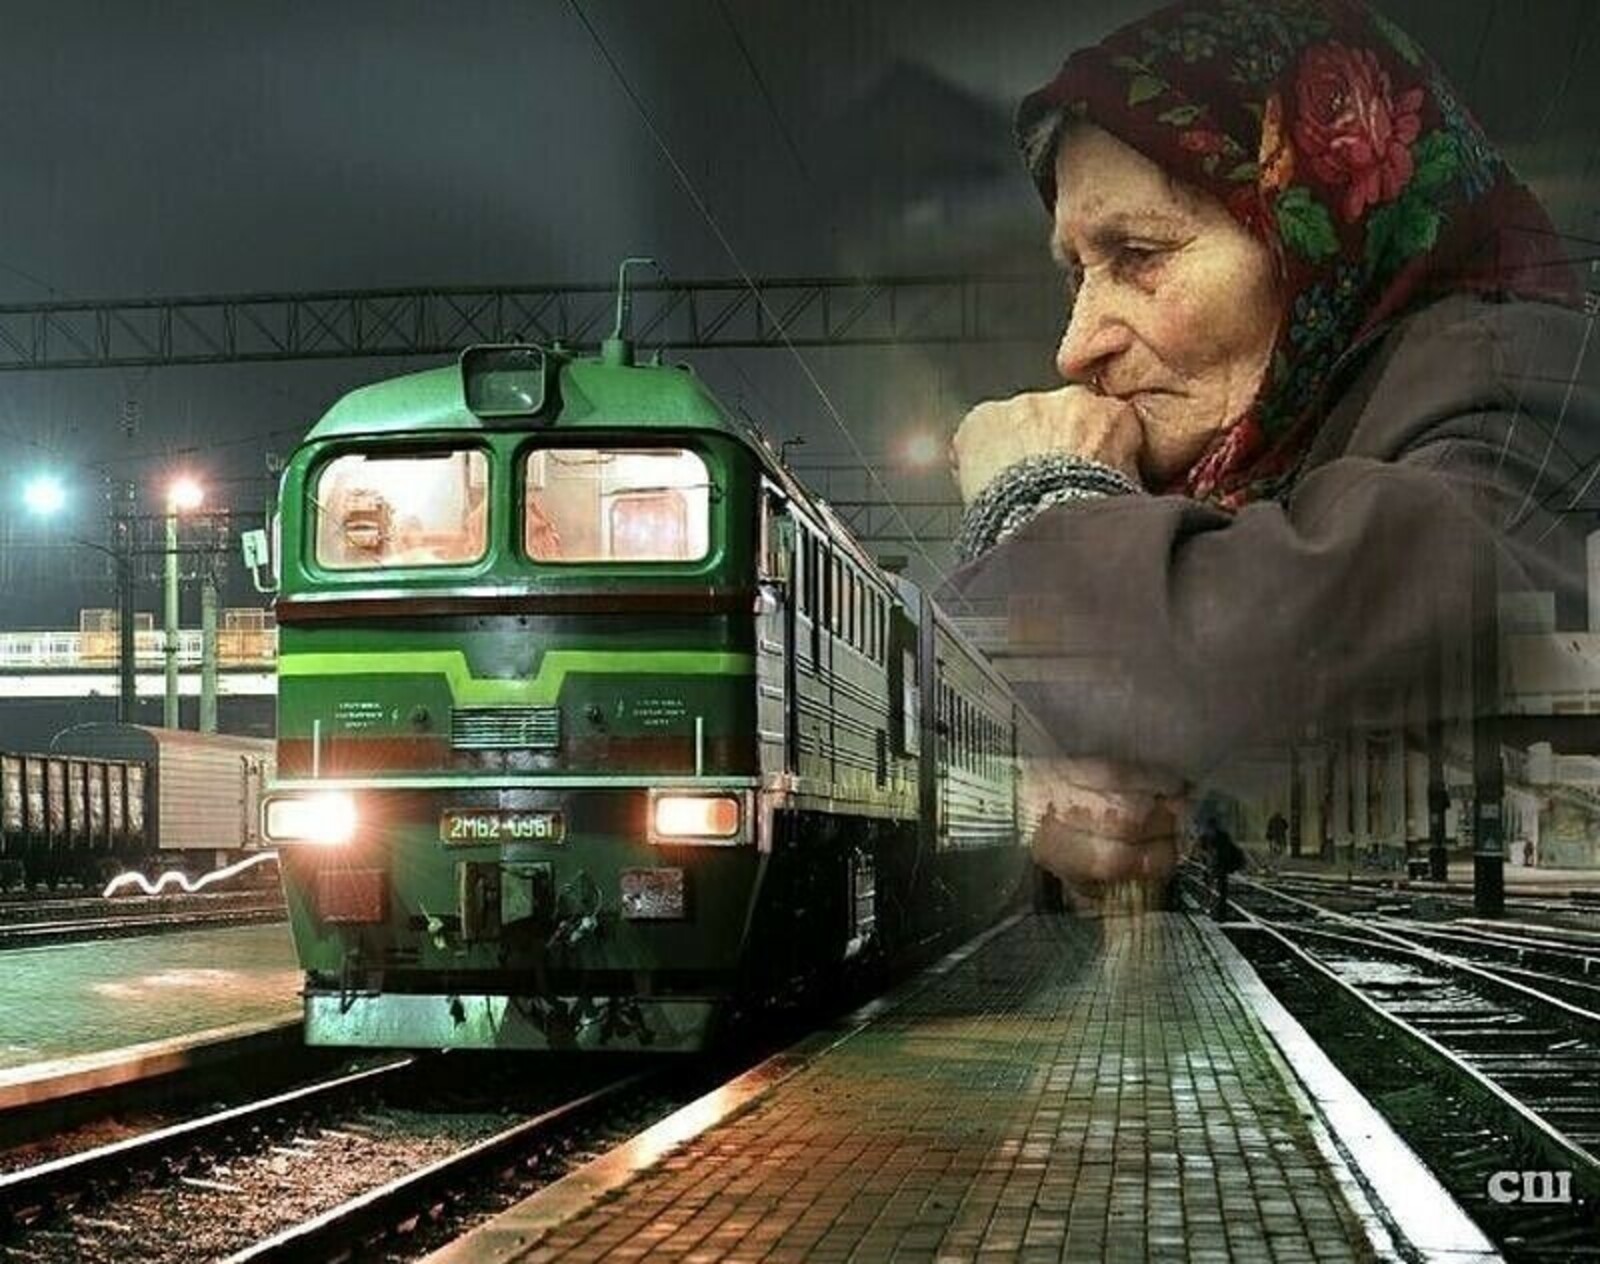 Поезд придет во время. Бабушка на вокзале. Старушка на вокзале. Ожидание поезда. Женщина на перроне.